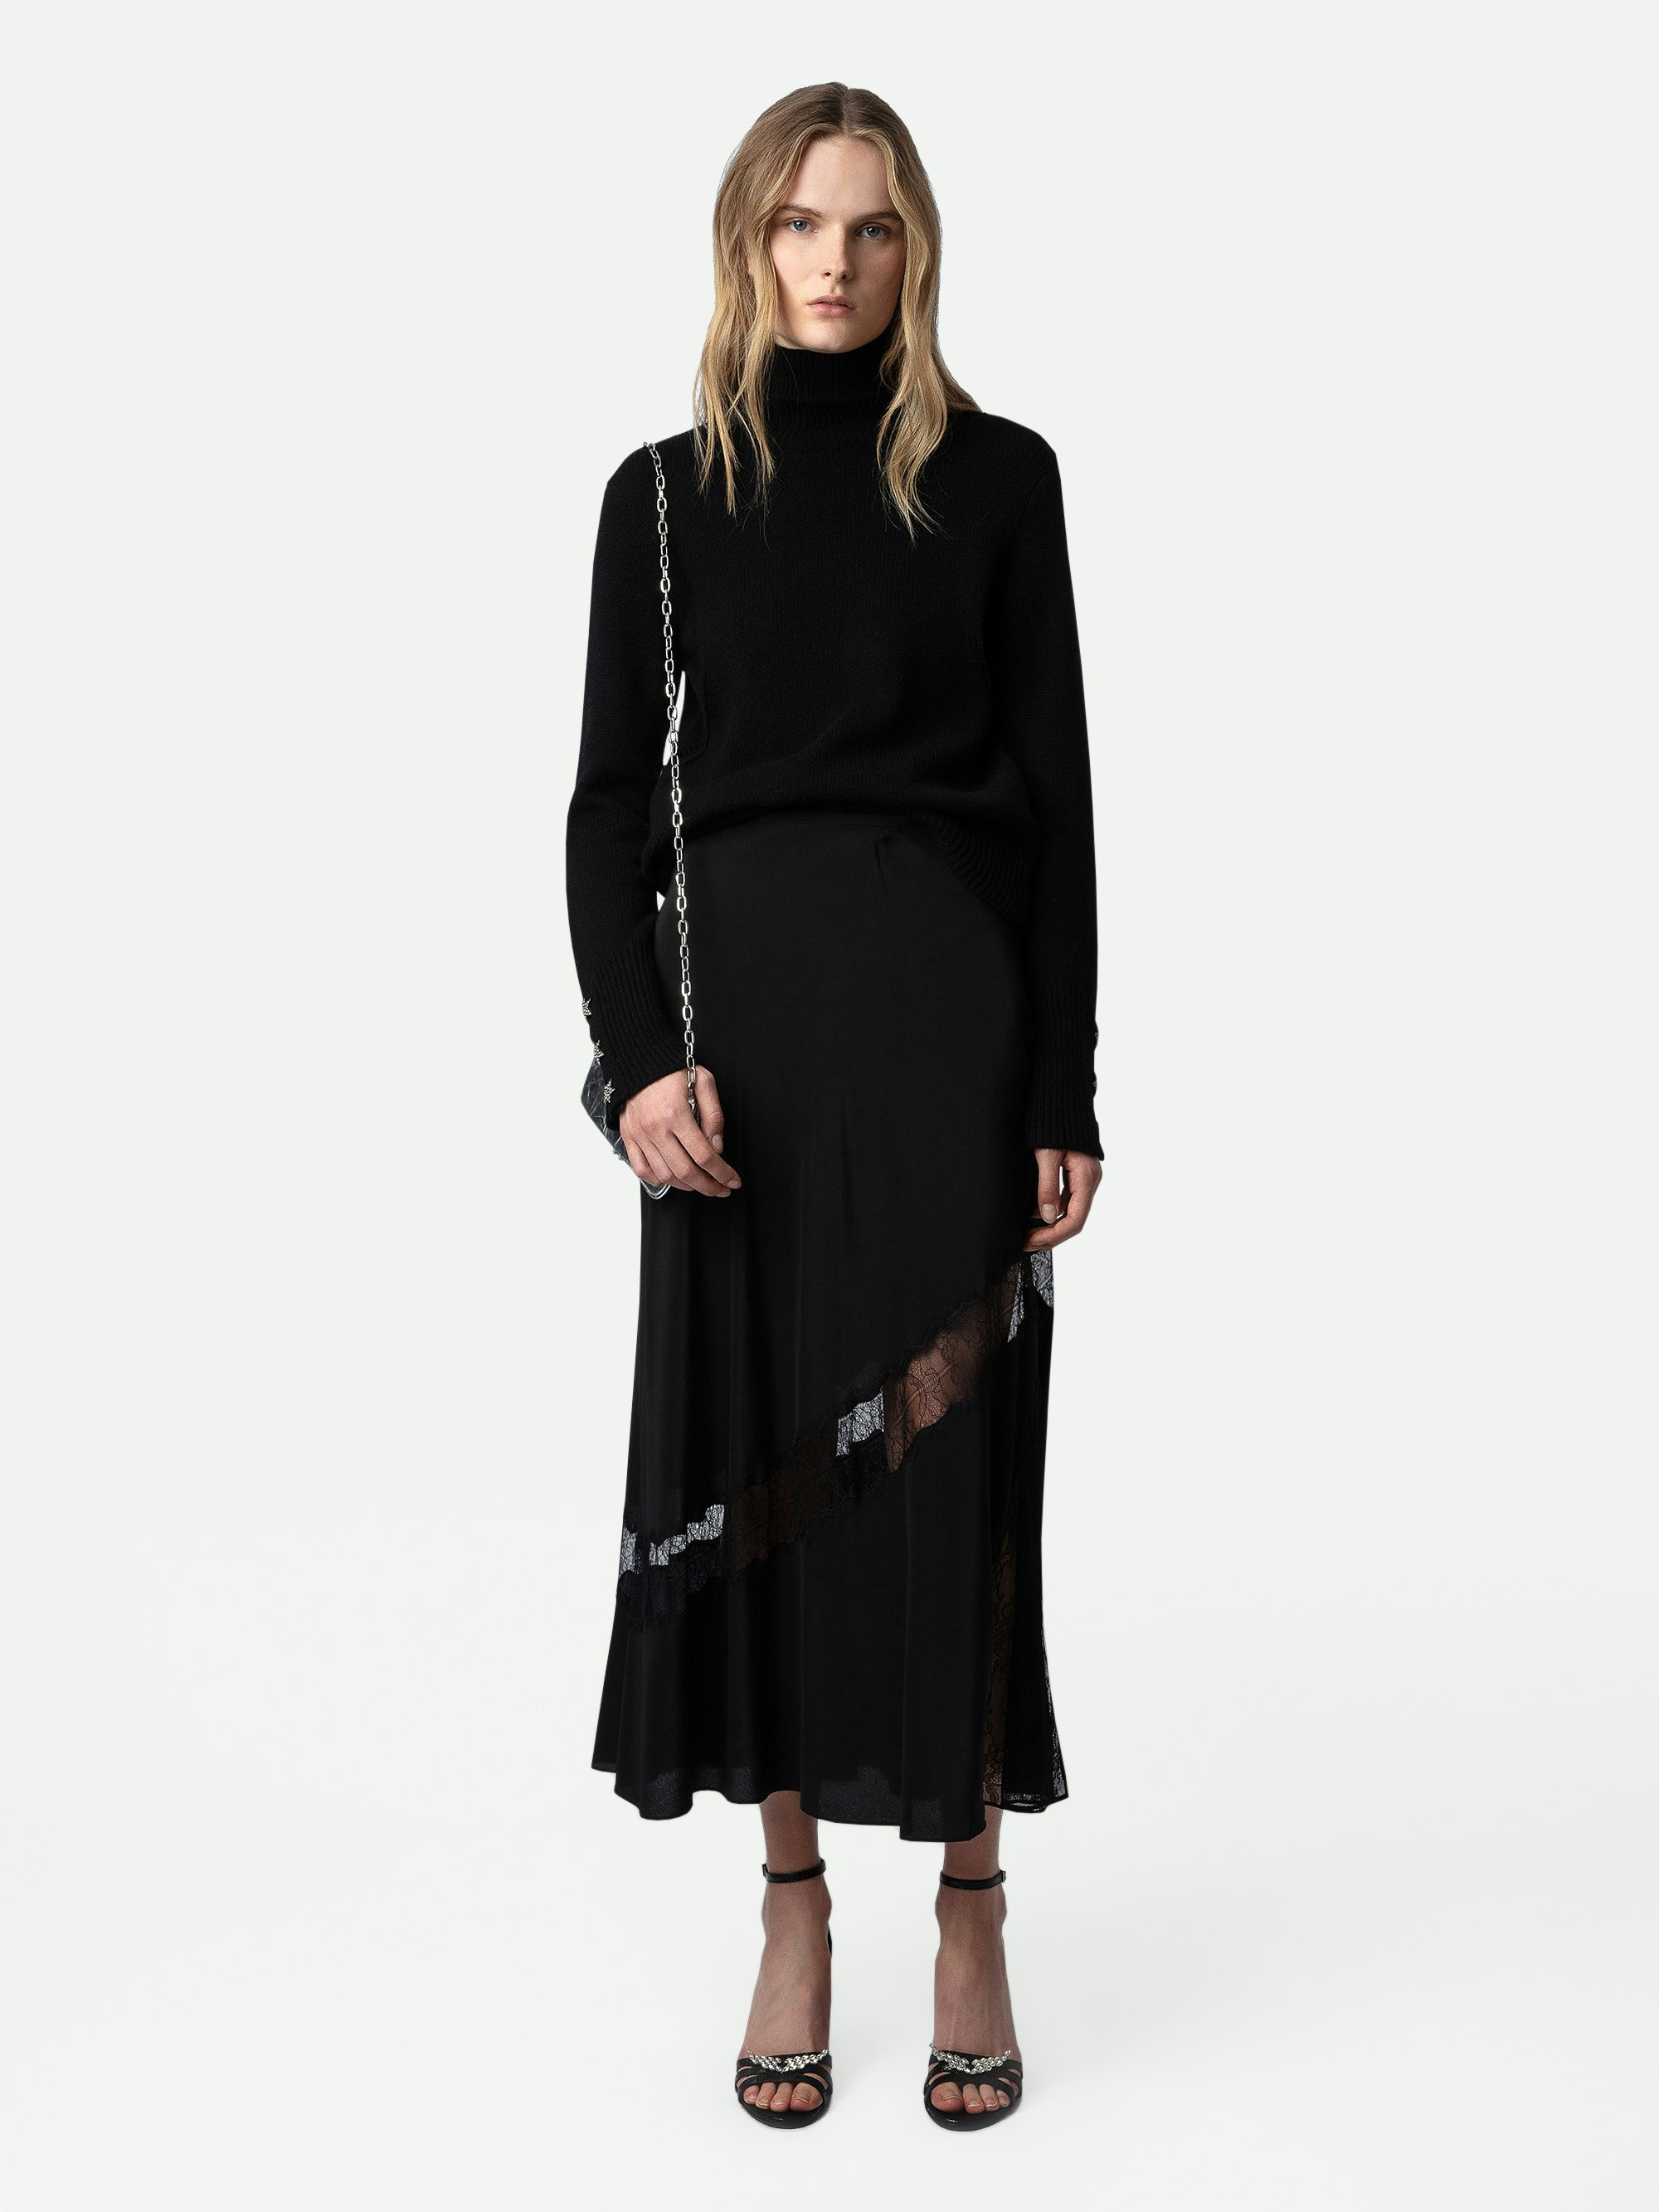 Jaylal Silk Skirt - Women’s black silk long skirt with zip fastening, splits and lace detailing.